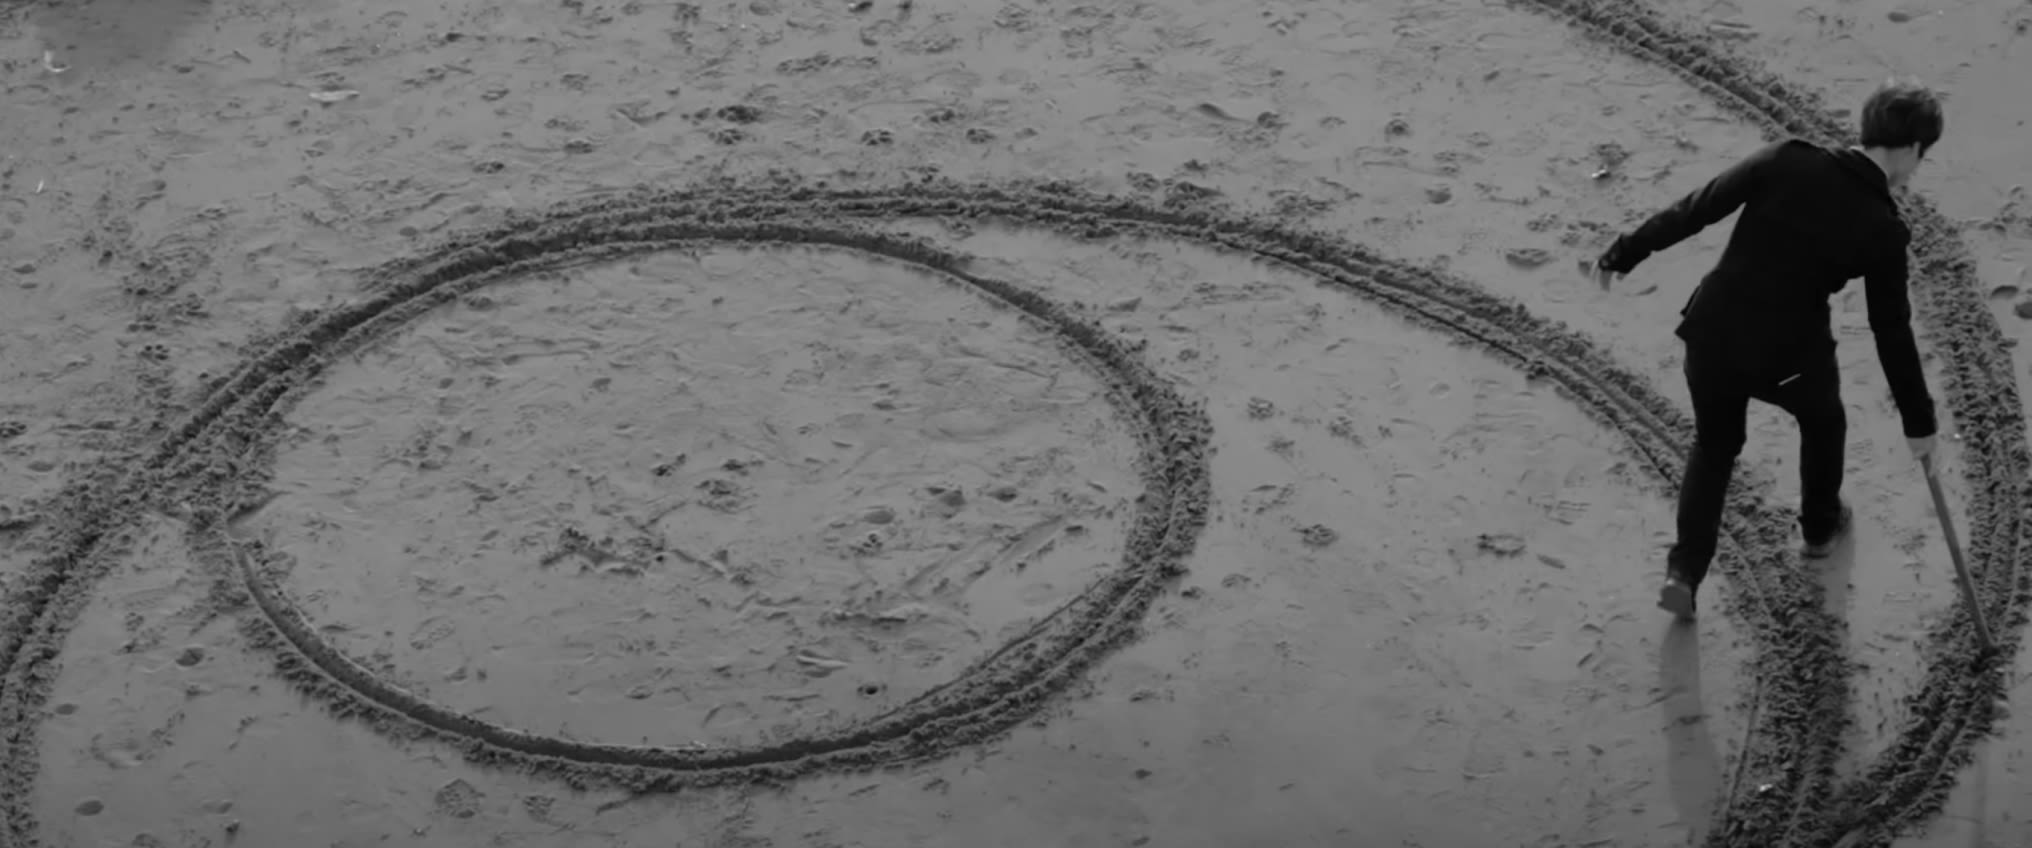 Ellen MacArthur drawing in the sand